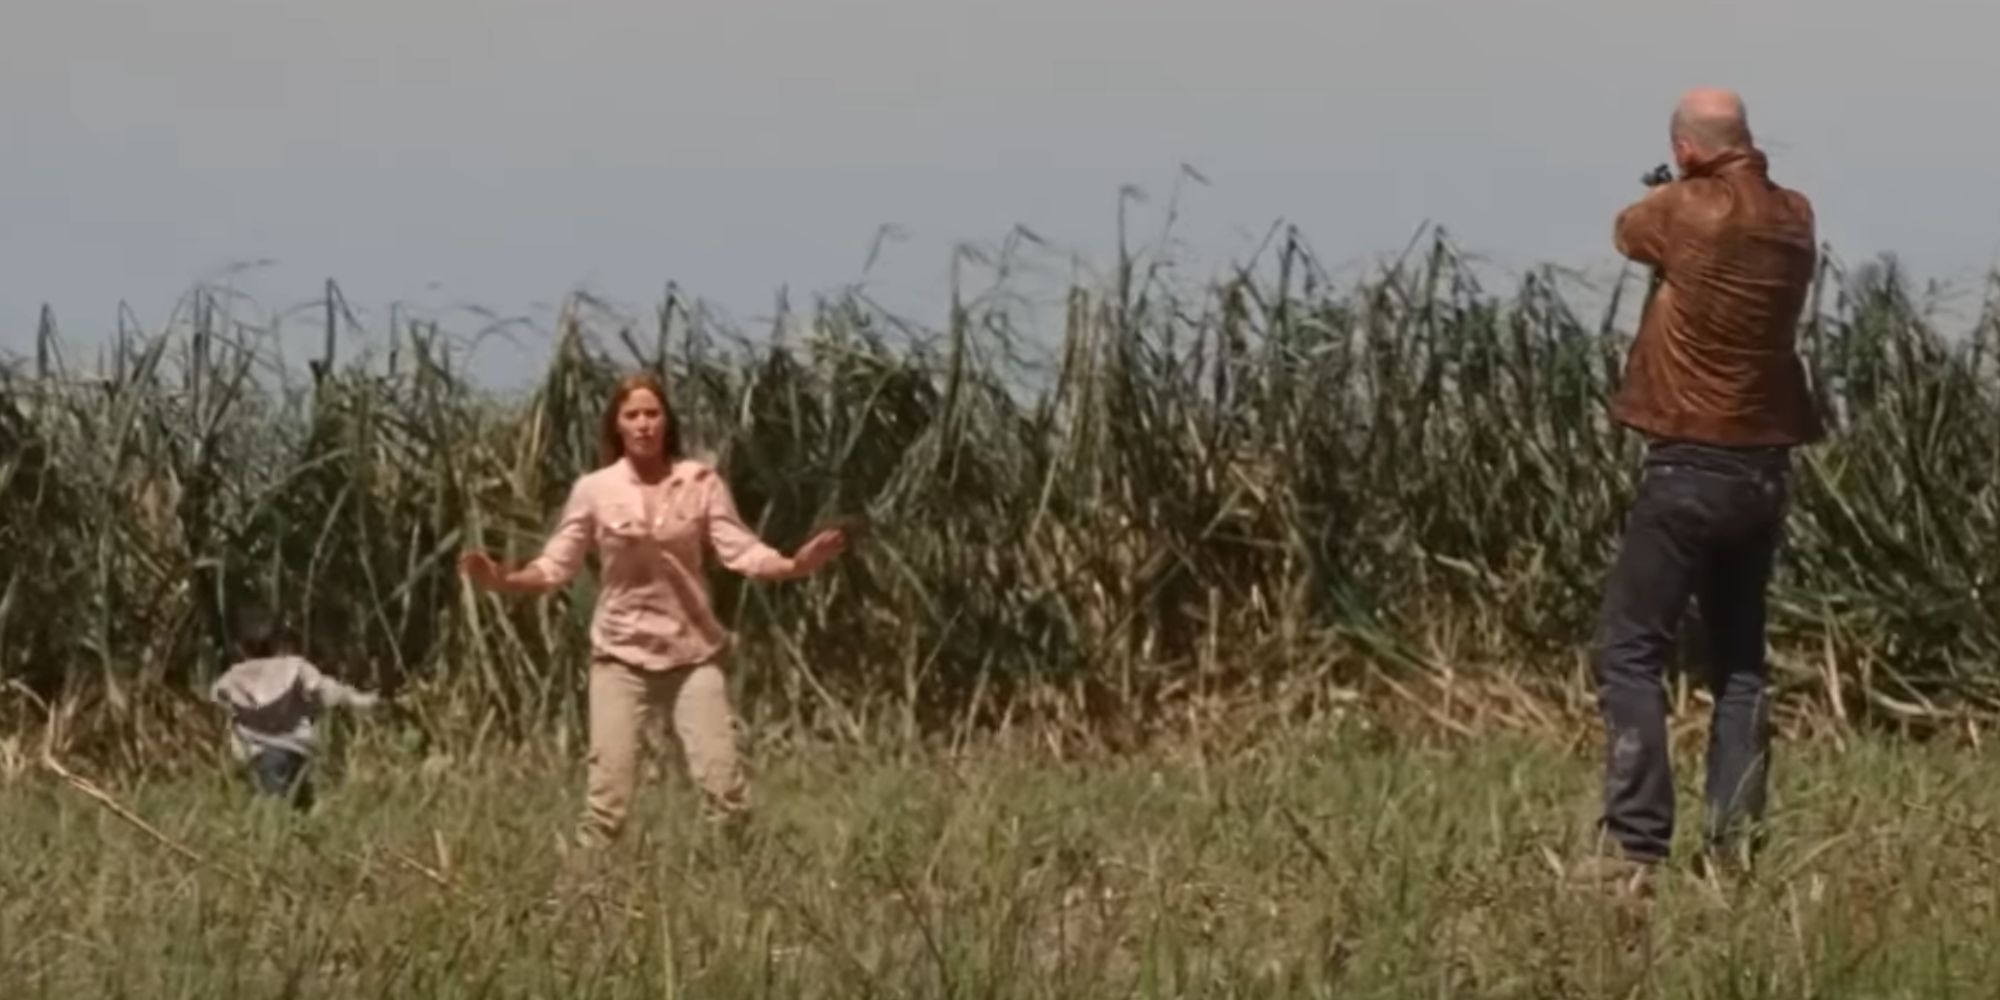 Old Joe aiming a gun at Sara in Looper as Cid escapes into the field behind